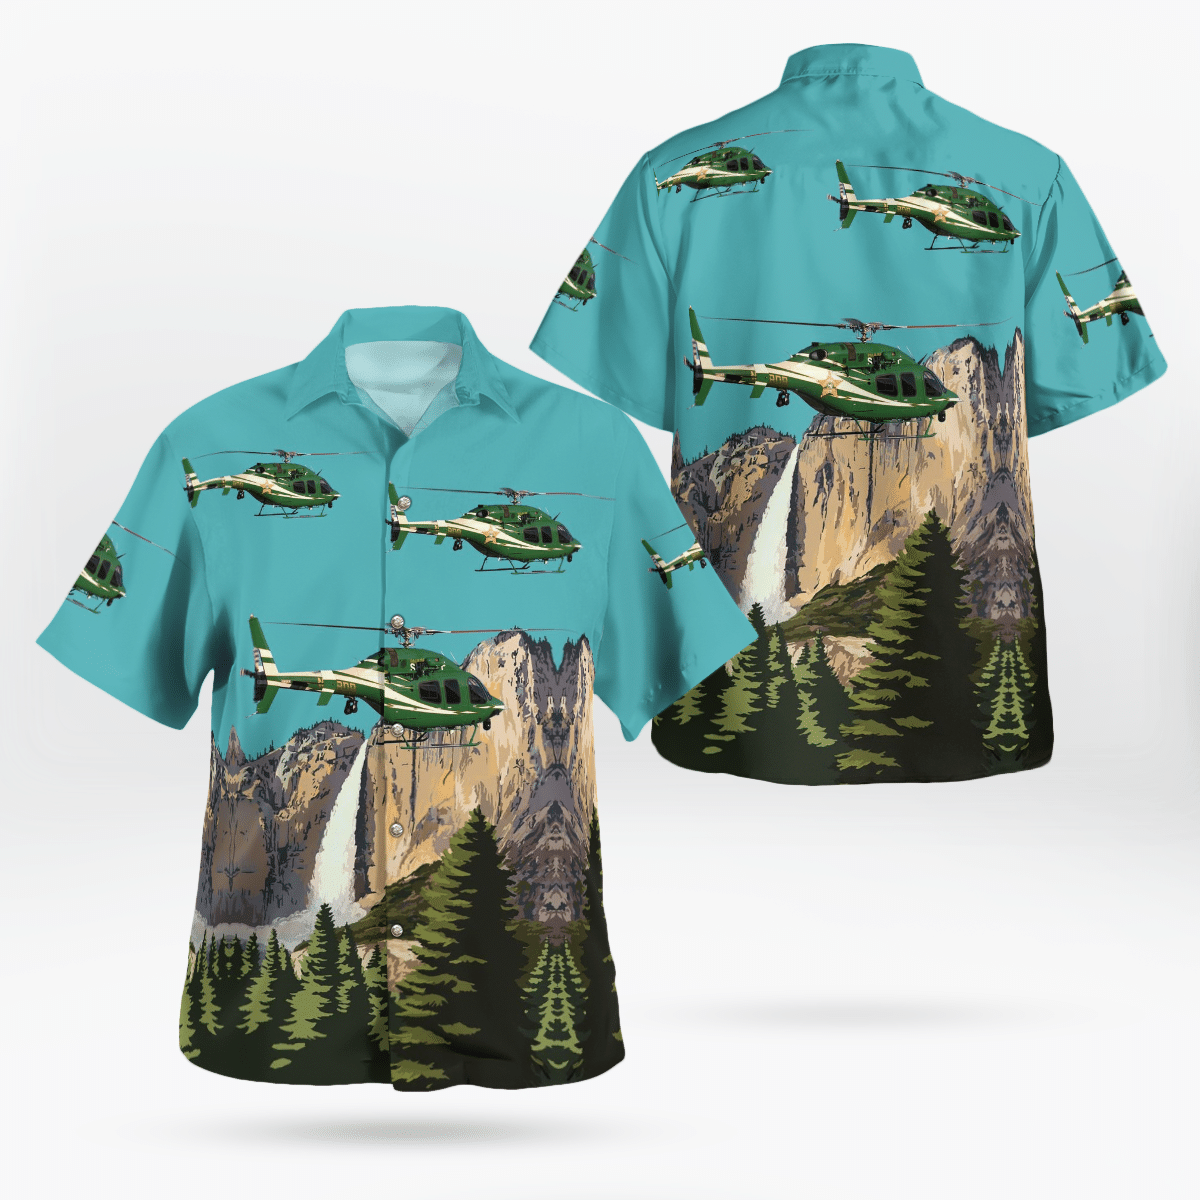 Listed below are some High-quality Aloha Shirt 147